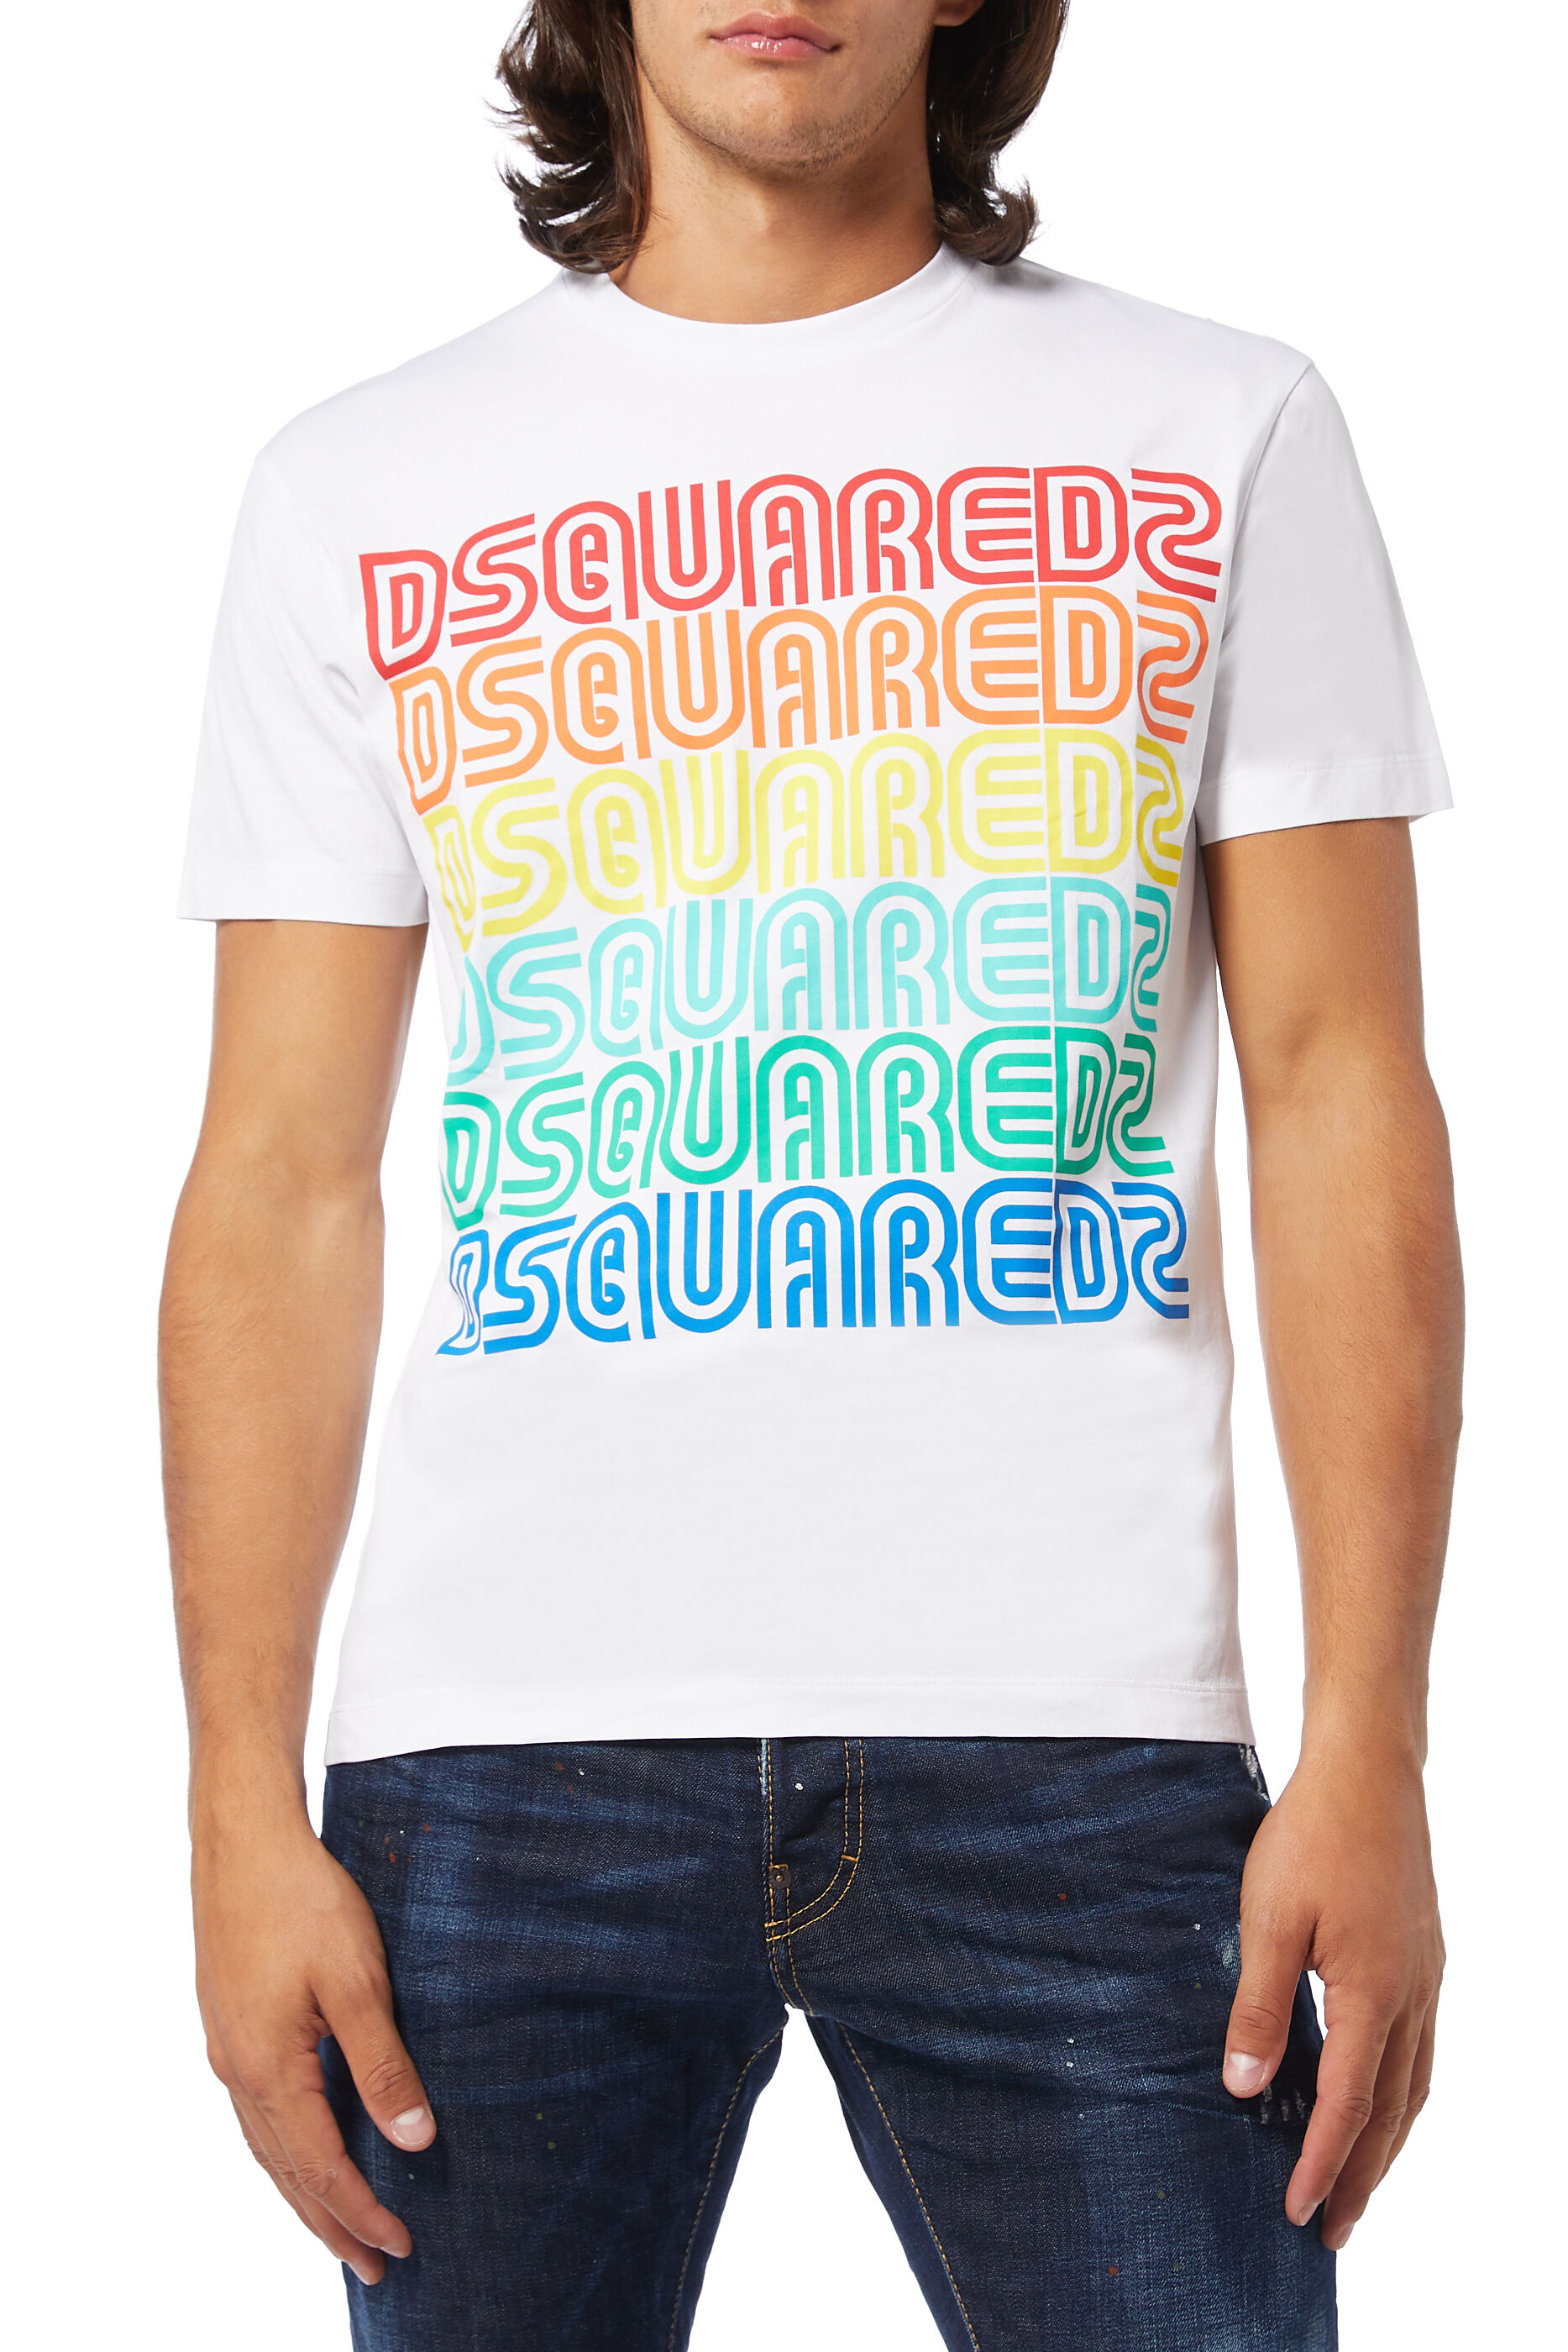 t shirt dsquared 2017